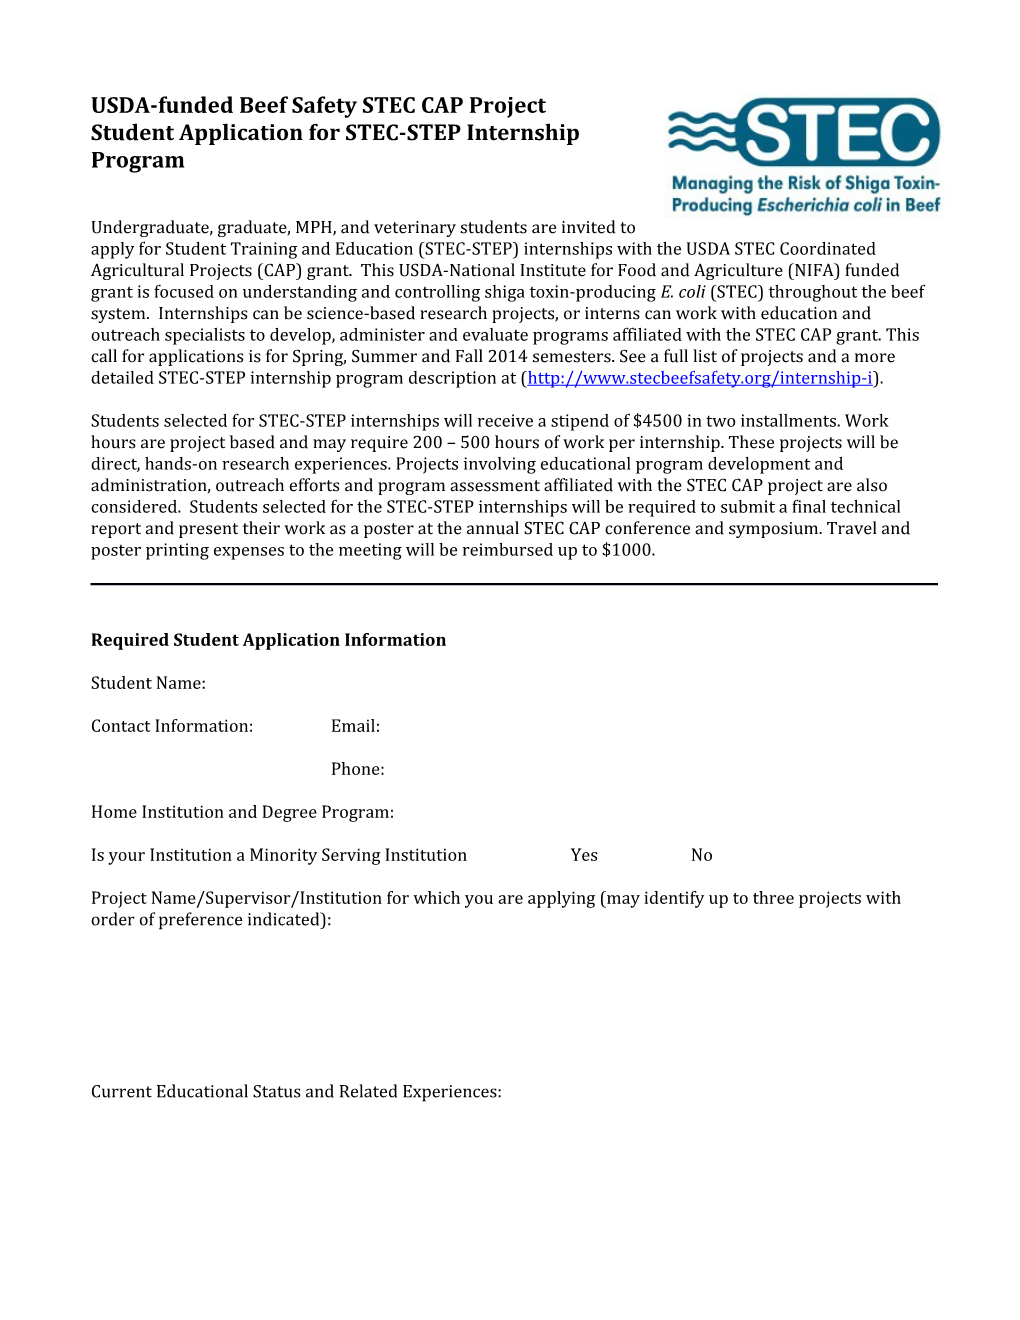 Student Application for STEC-STEP Internship Program